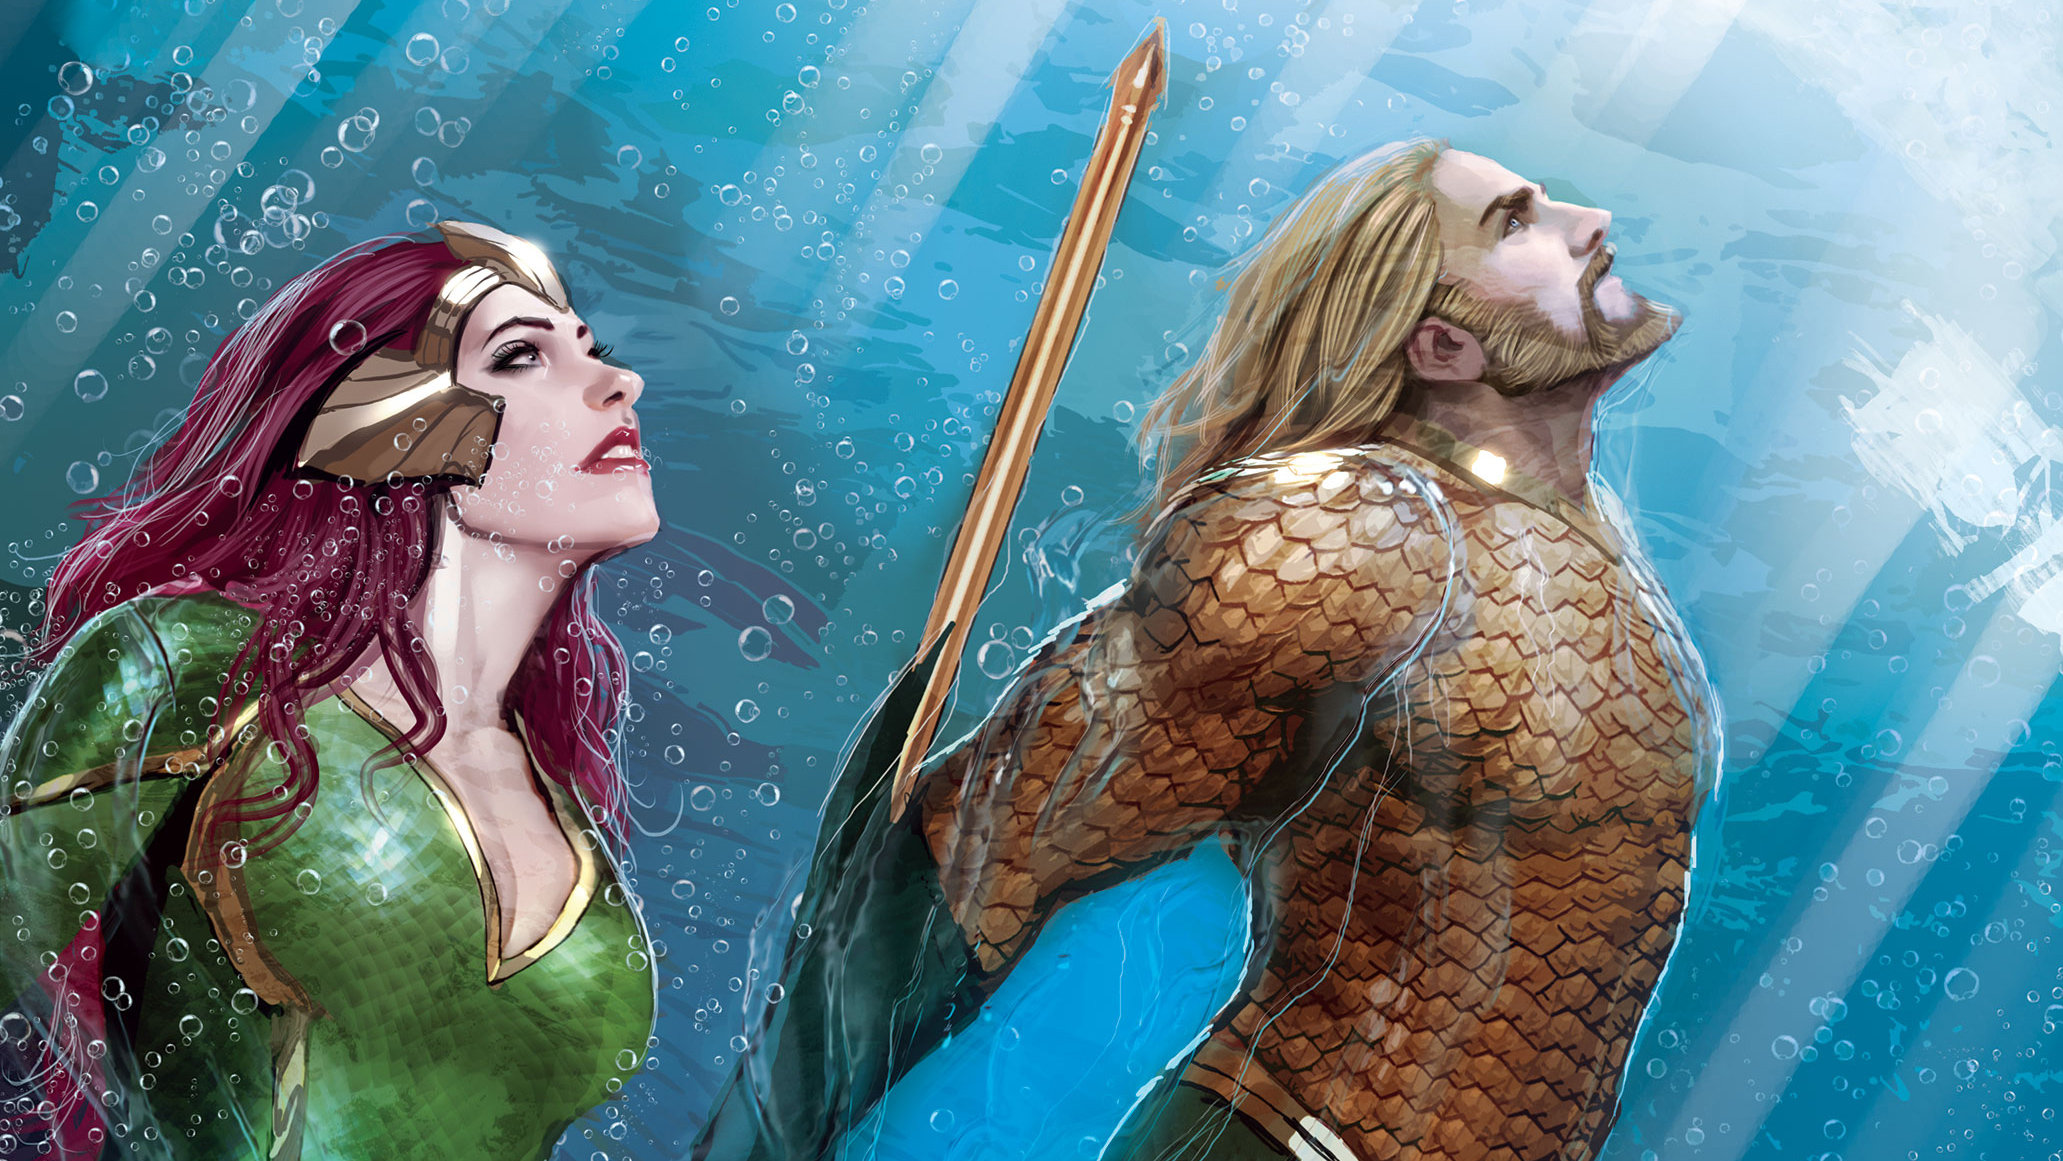 Mera Aquaman Art Hd Superheroes 4k Wallpapers Images Backgrounds